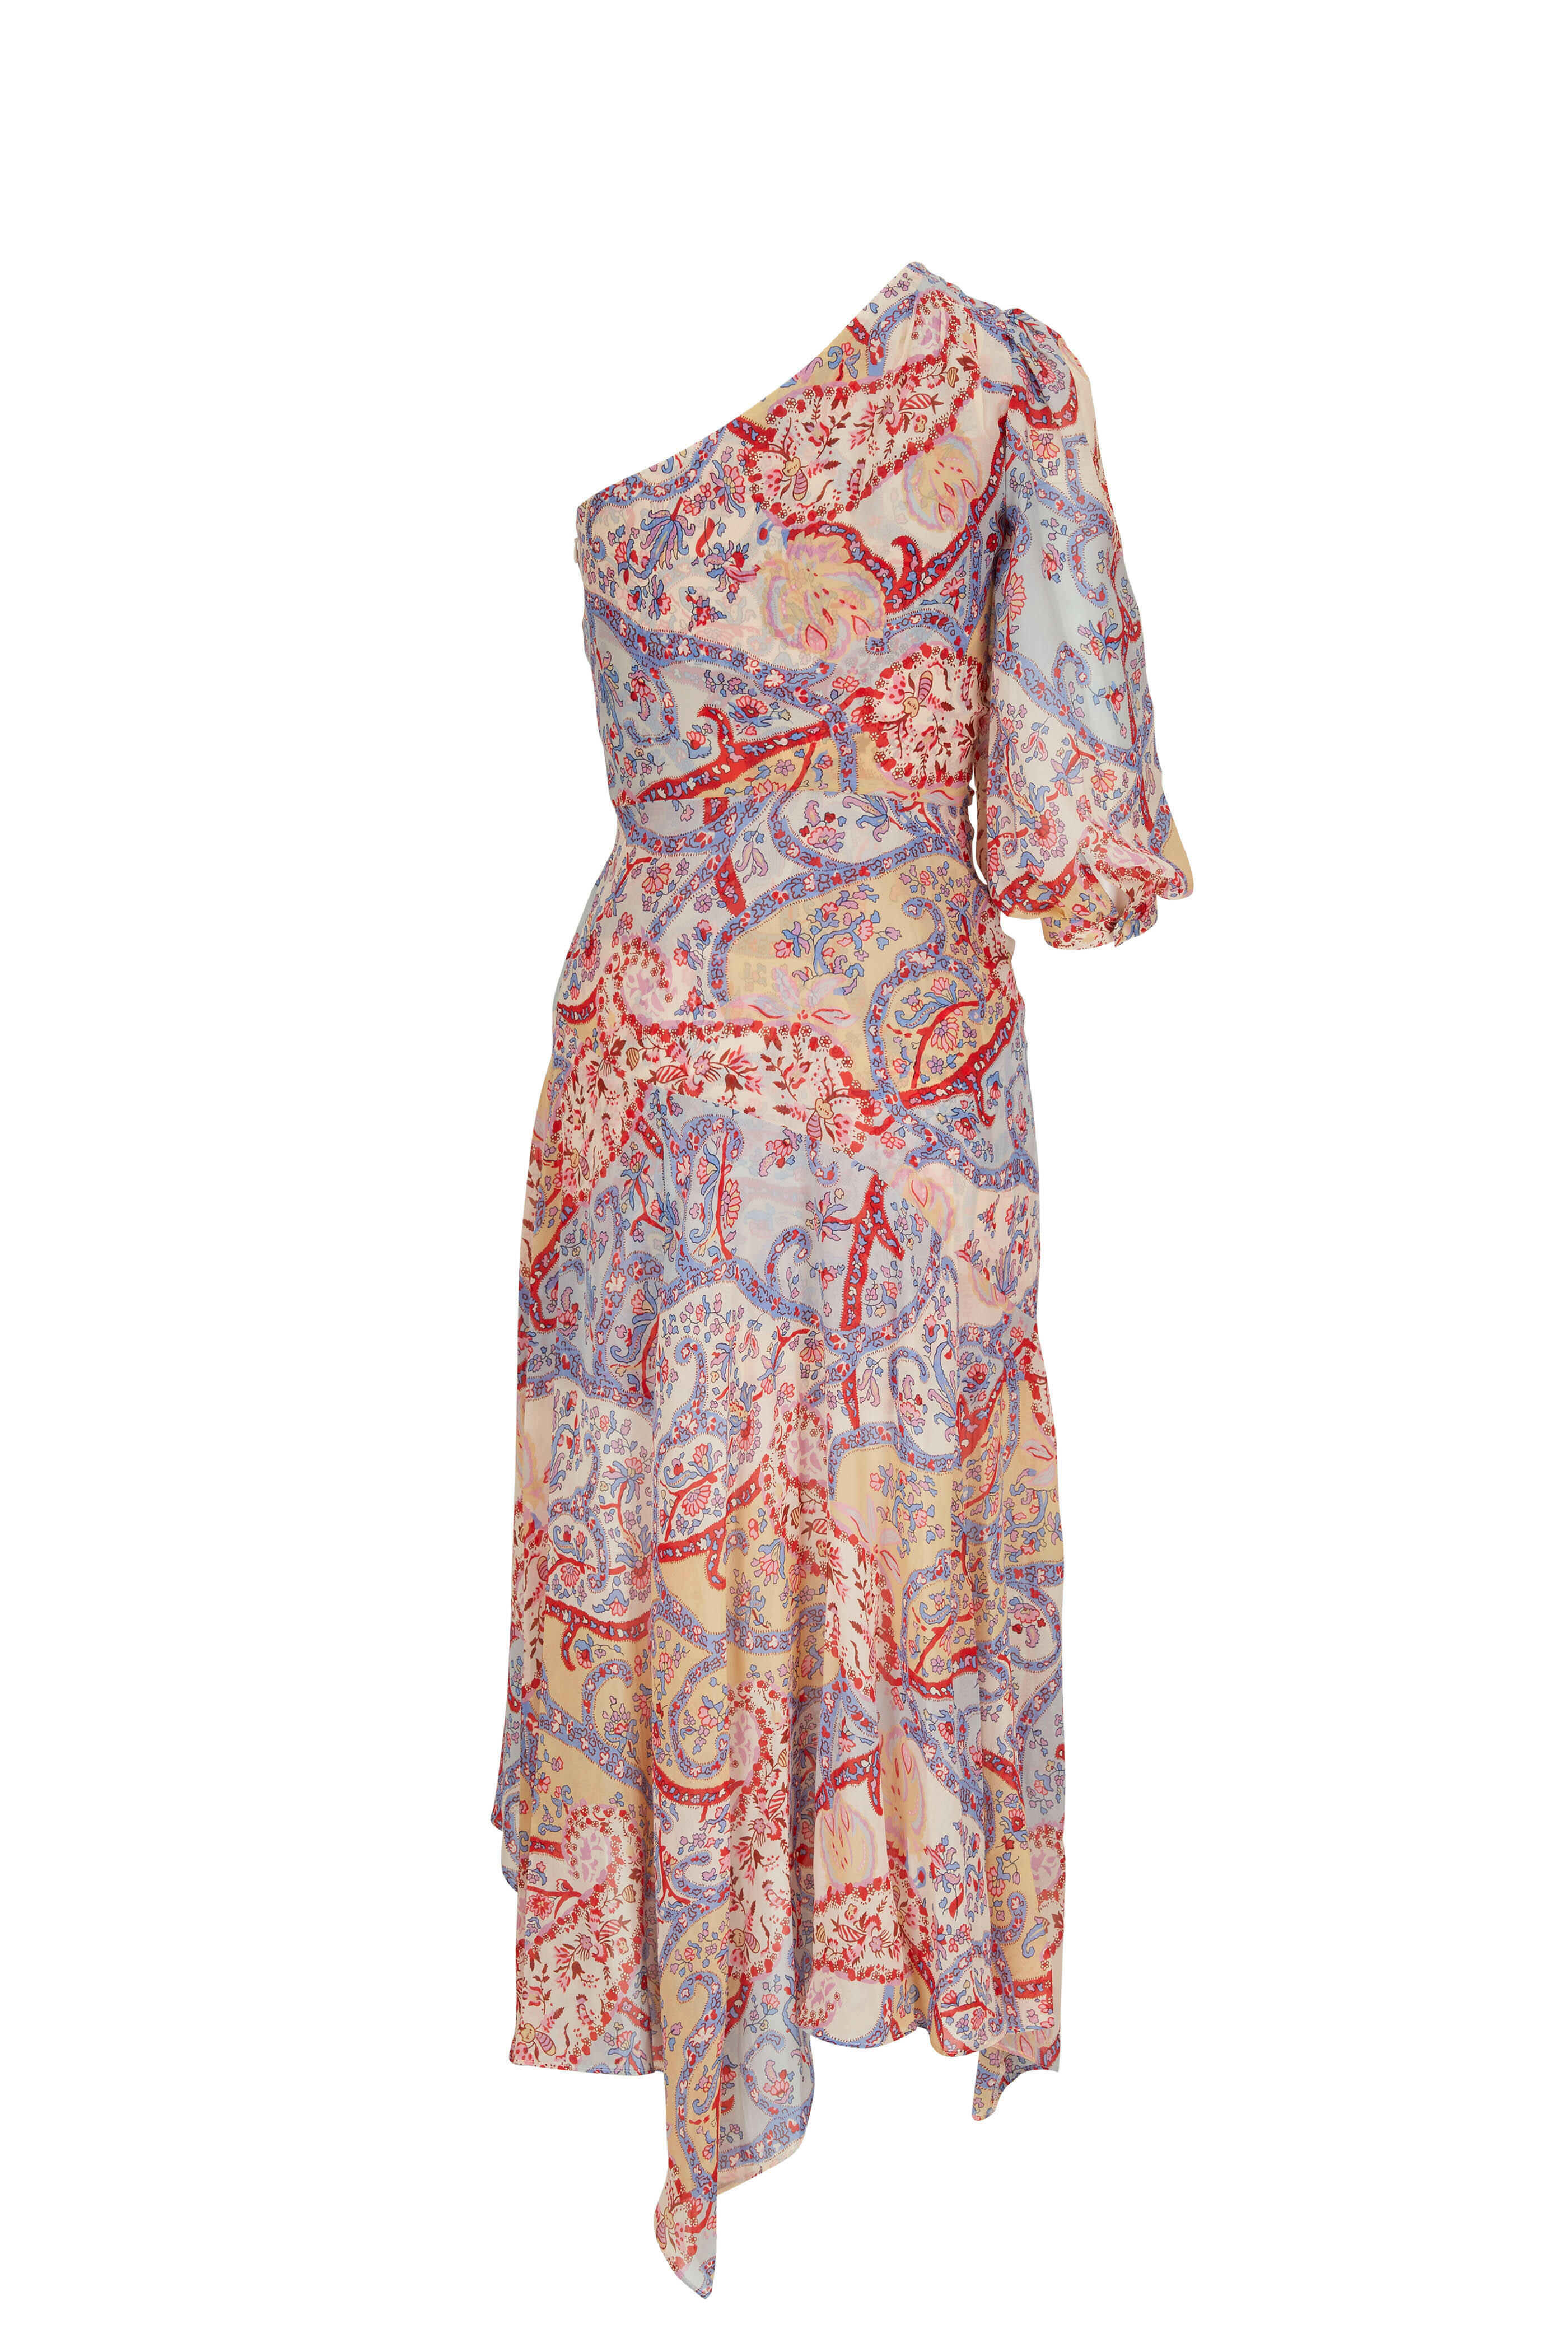 Veronica Beard - Kimber Paisley Multicolor One-Shoulder Dress